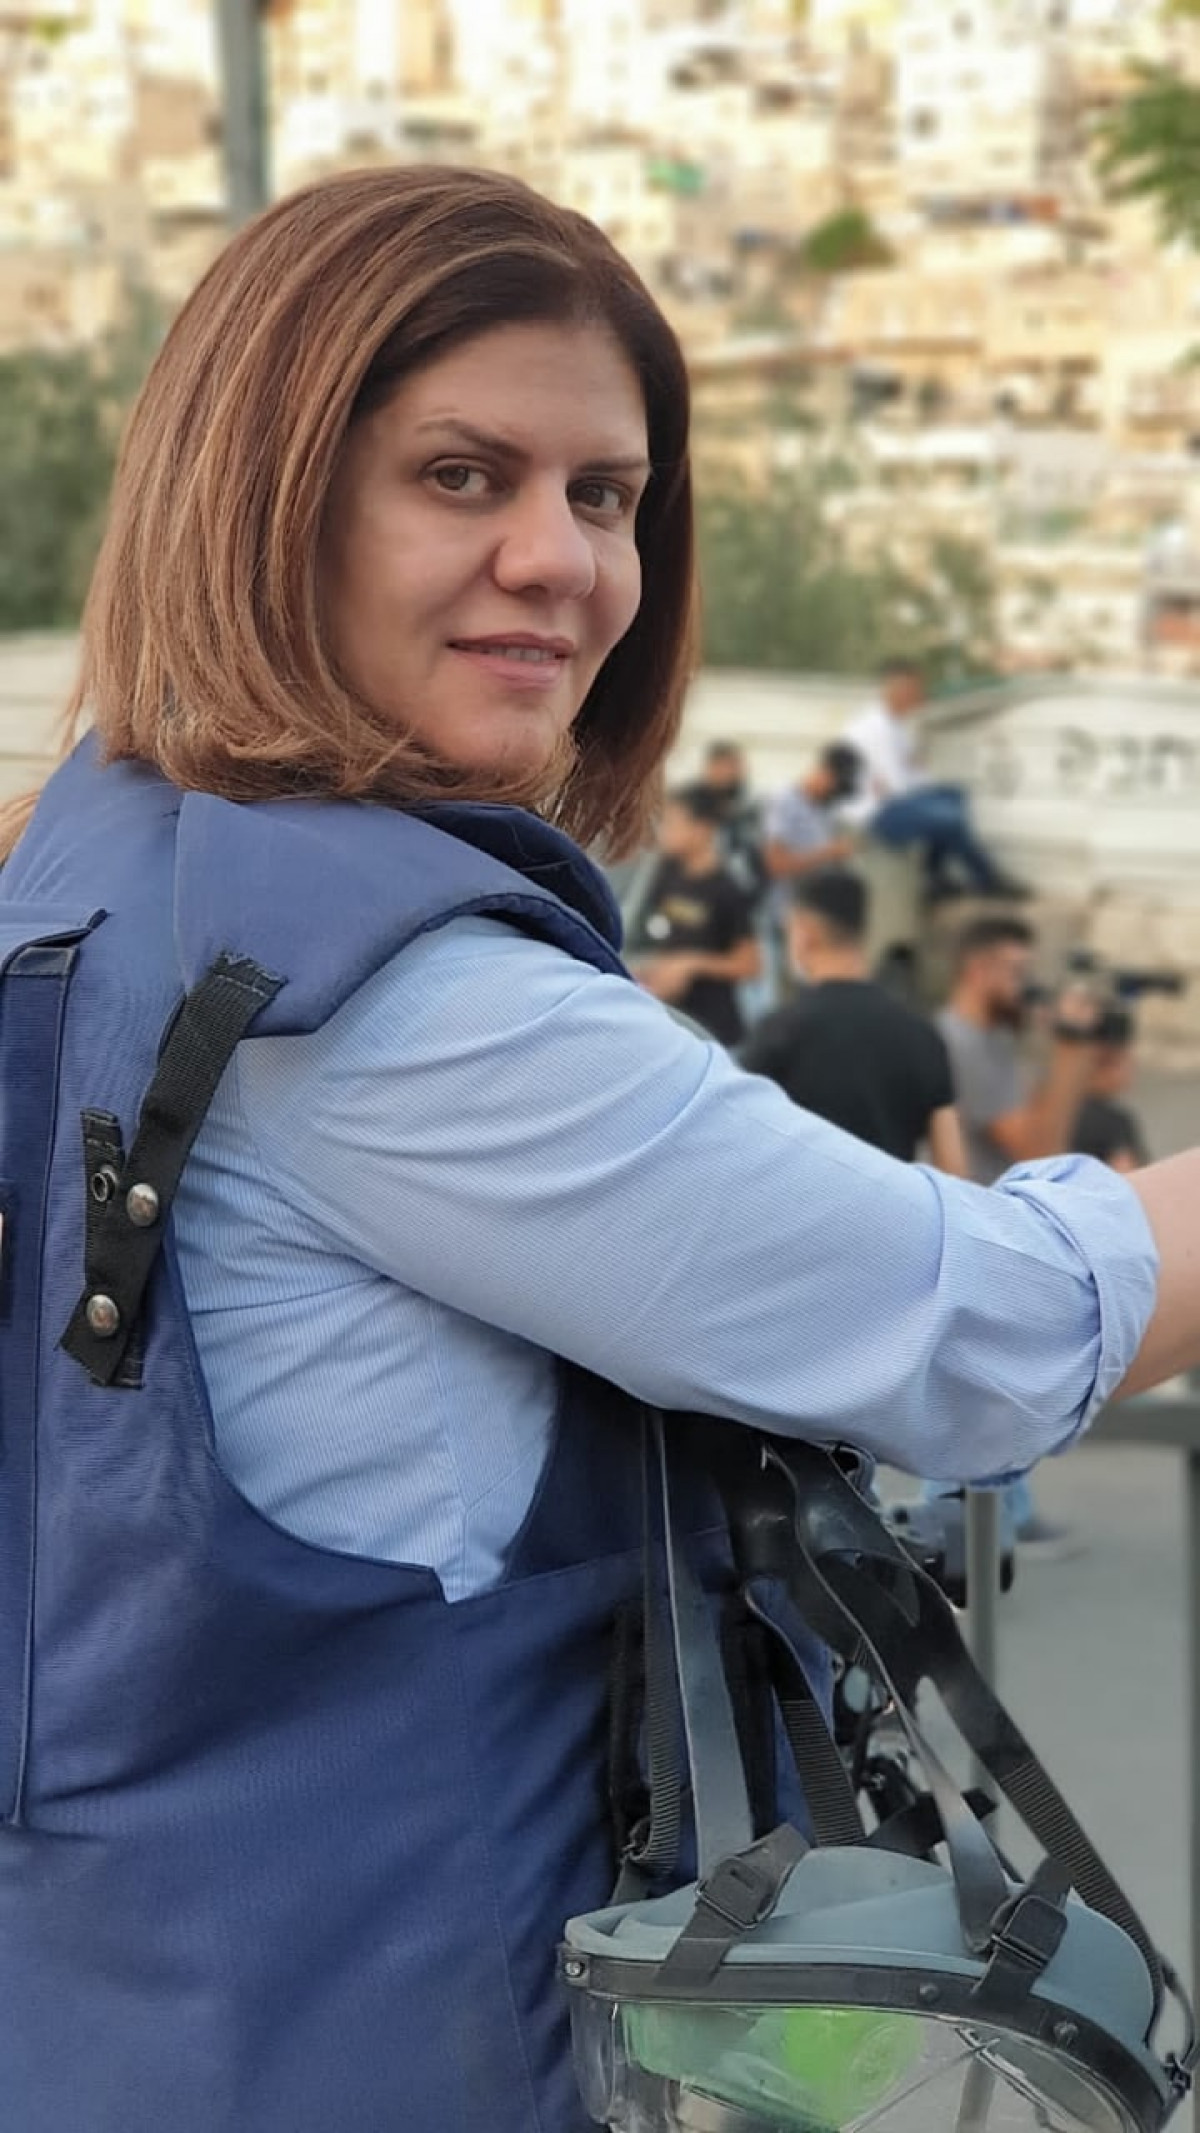 Killing the story: Al-Jazeera journalist, Shireen Abu Akleh’s murder by Zionist troops sparked a worldwide outcry